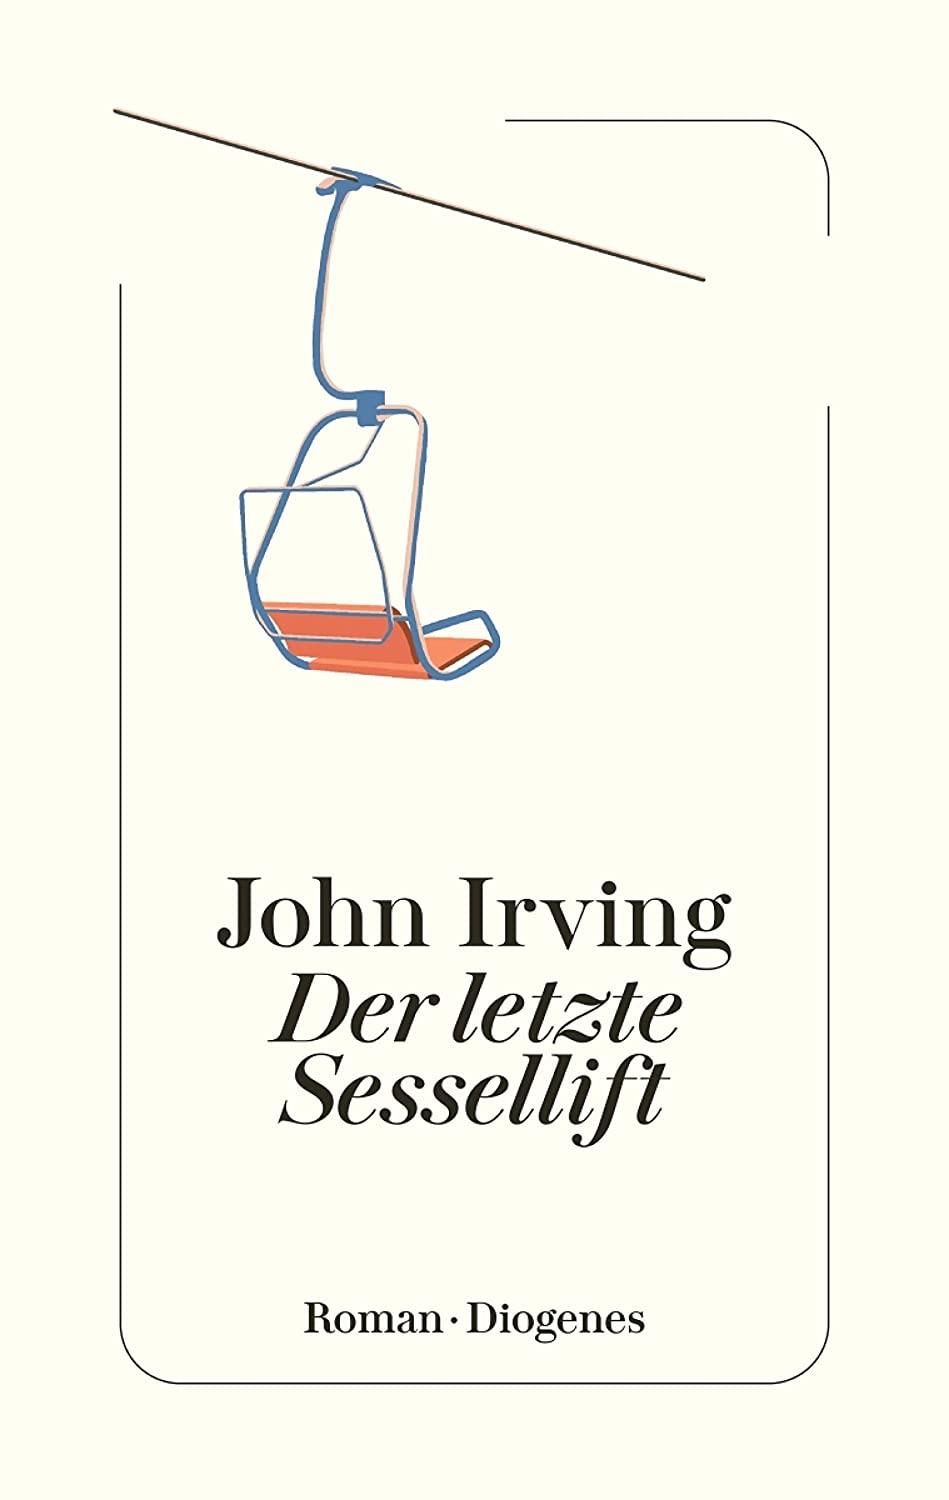 Irving, John: Der letzte Sessellift (EBook, German language, 2023, Diogenes)